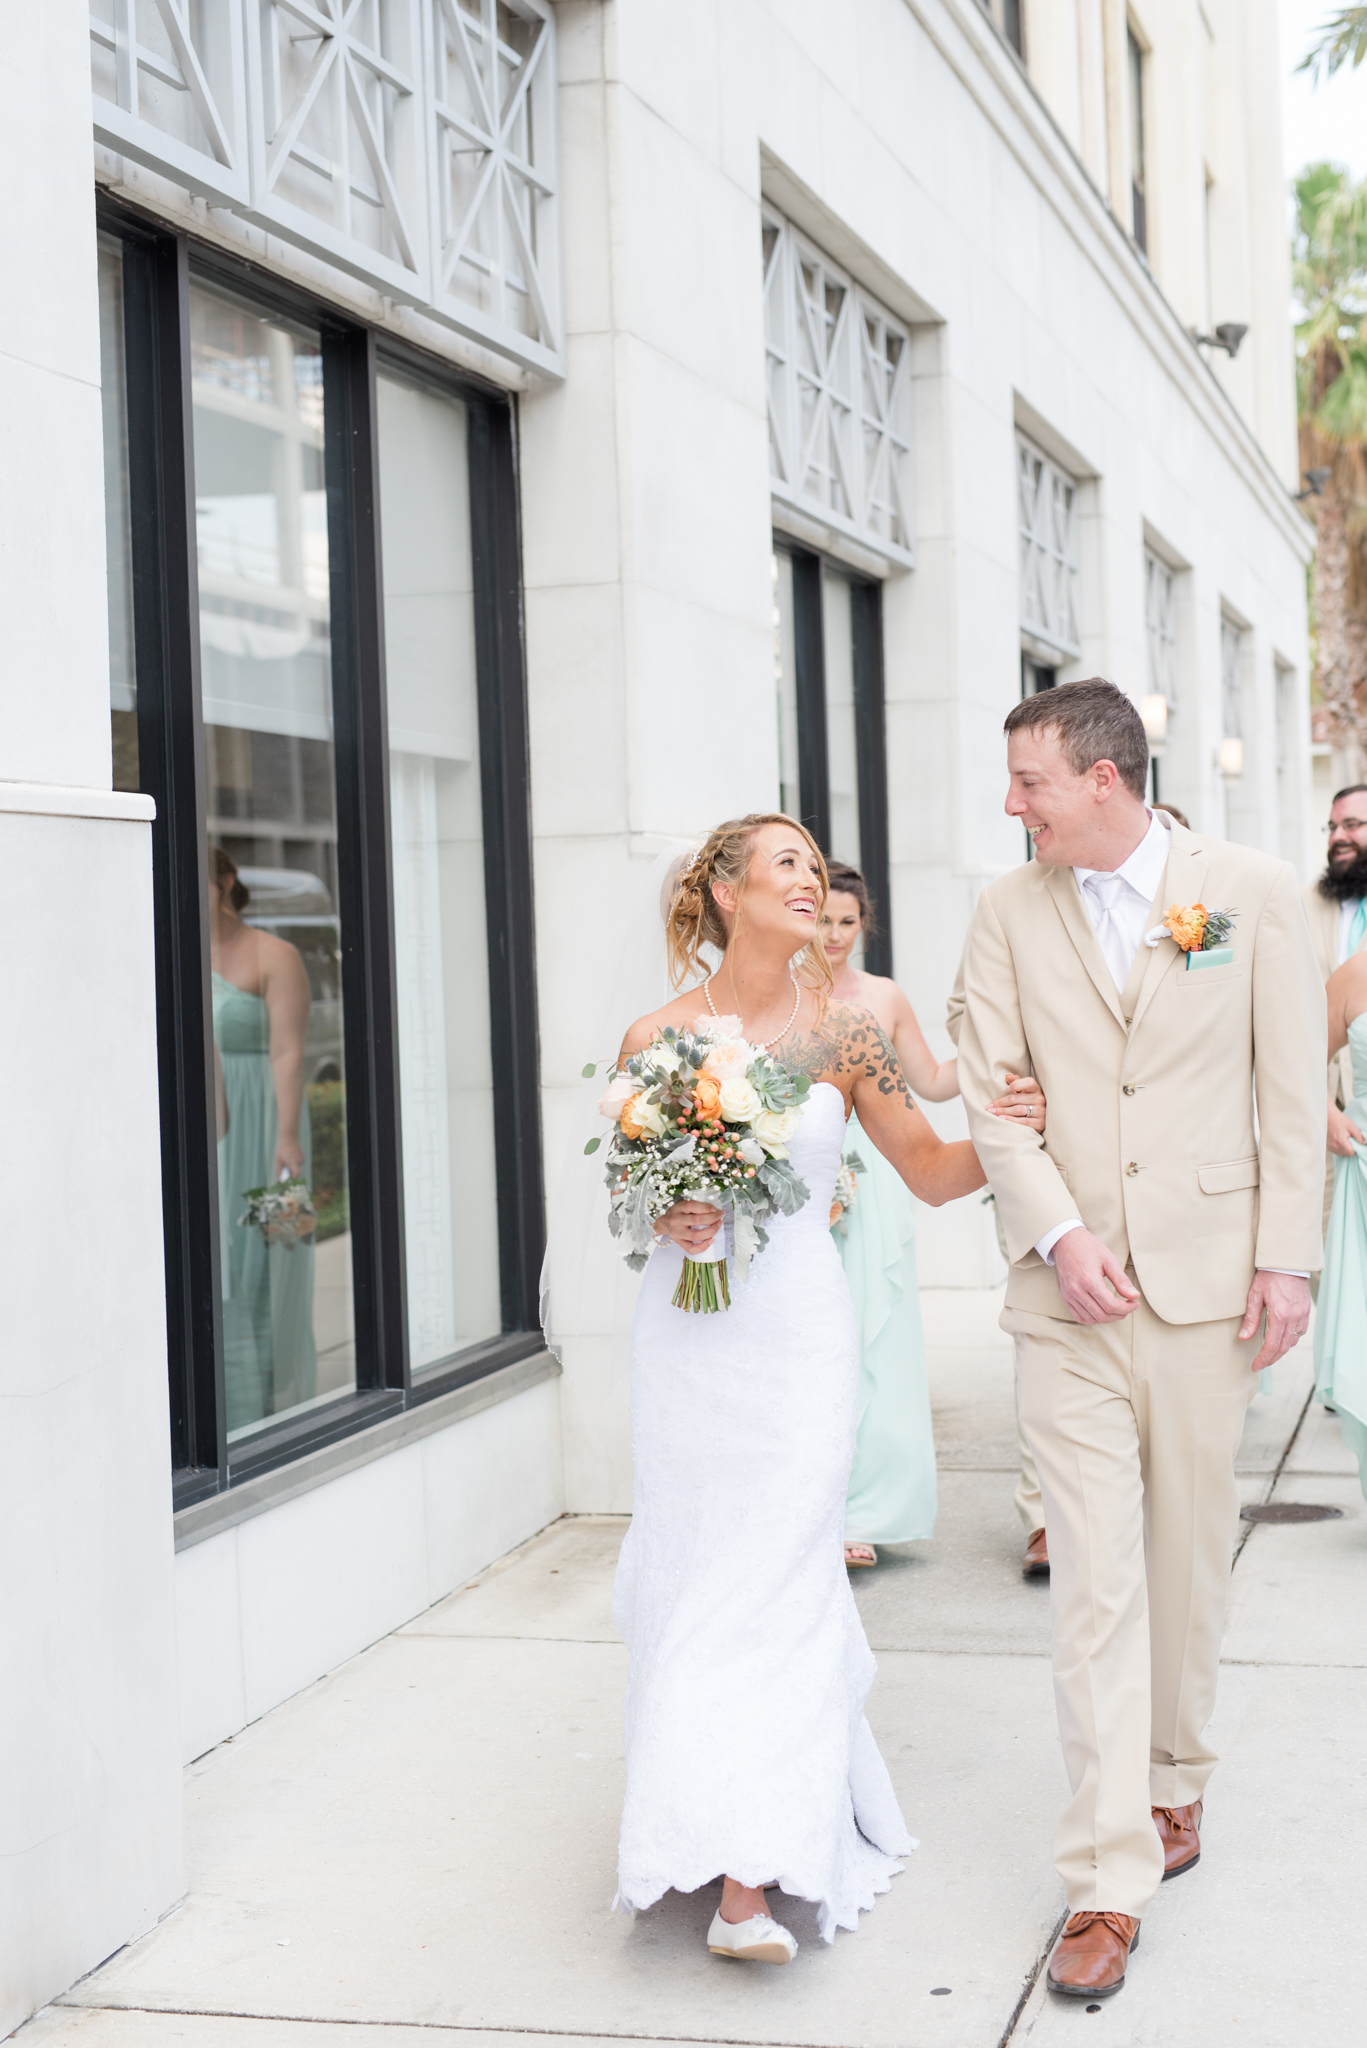 Bride and groom walk down sidewalk with bridal party.